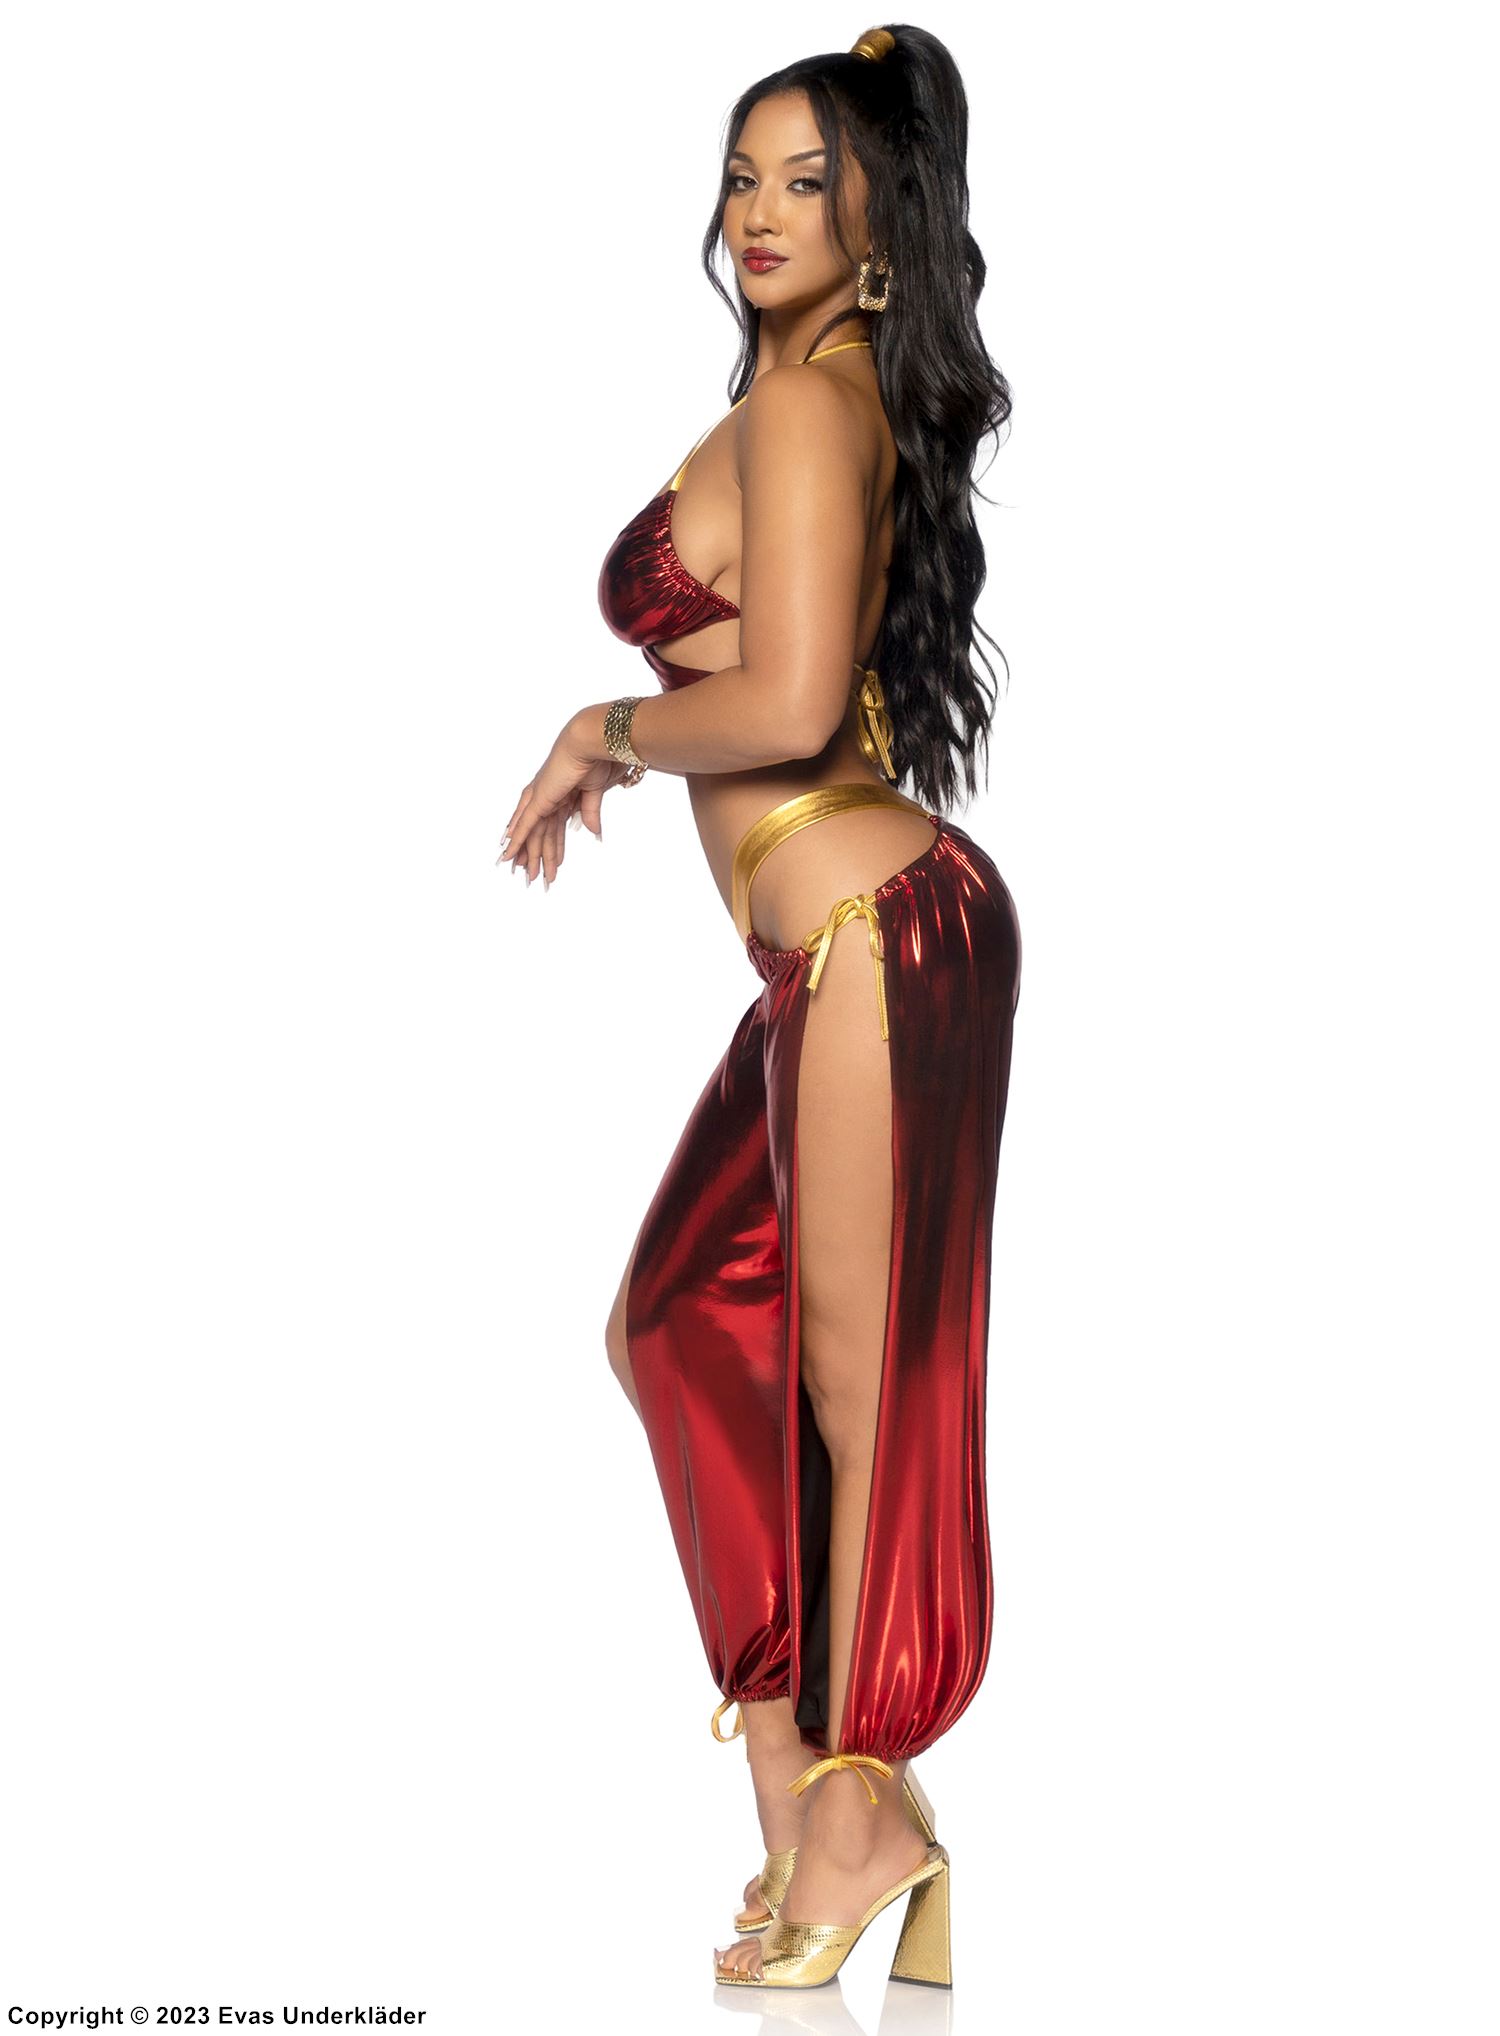 Princess Jasmine from Aladdin, costume top and pants, iridescent fabric, high slit